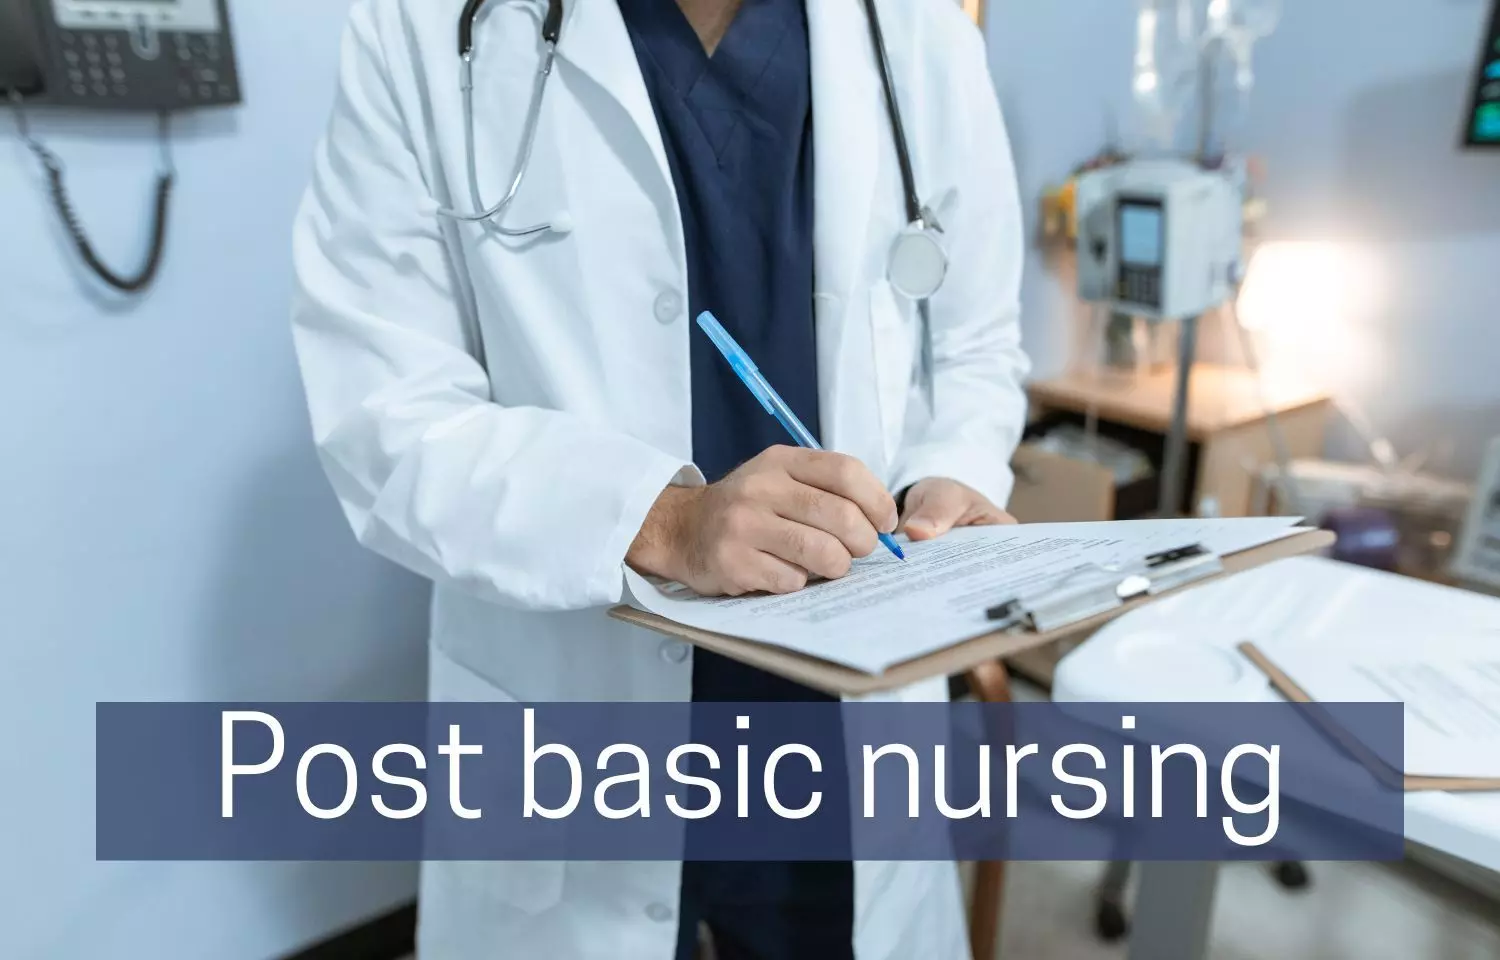 NTRUHS Post Basic BSc Nursing 2022 admissions, last date to Apply September 2nd